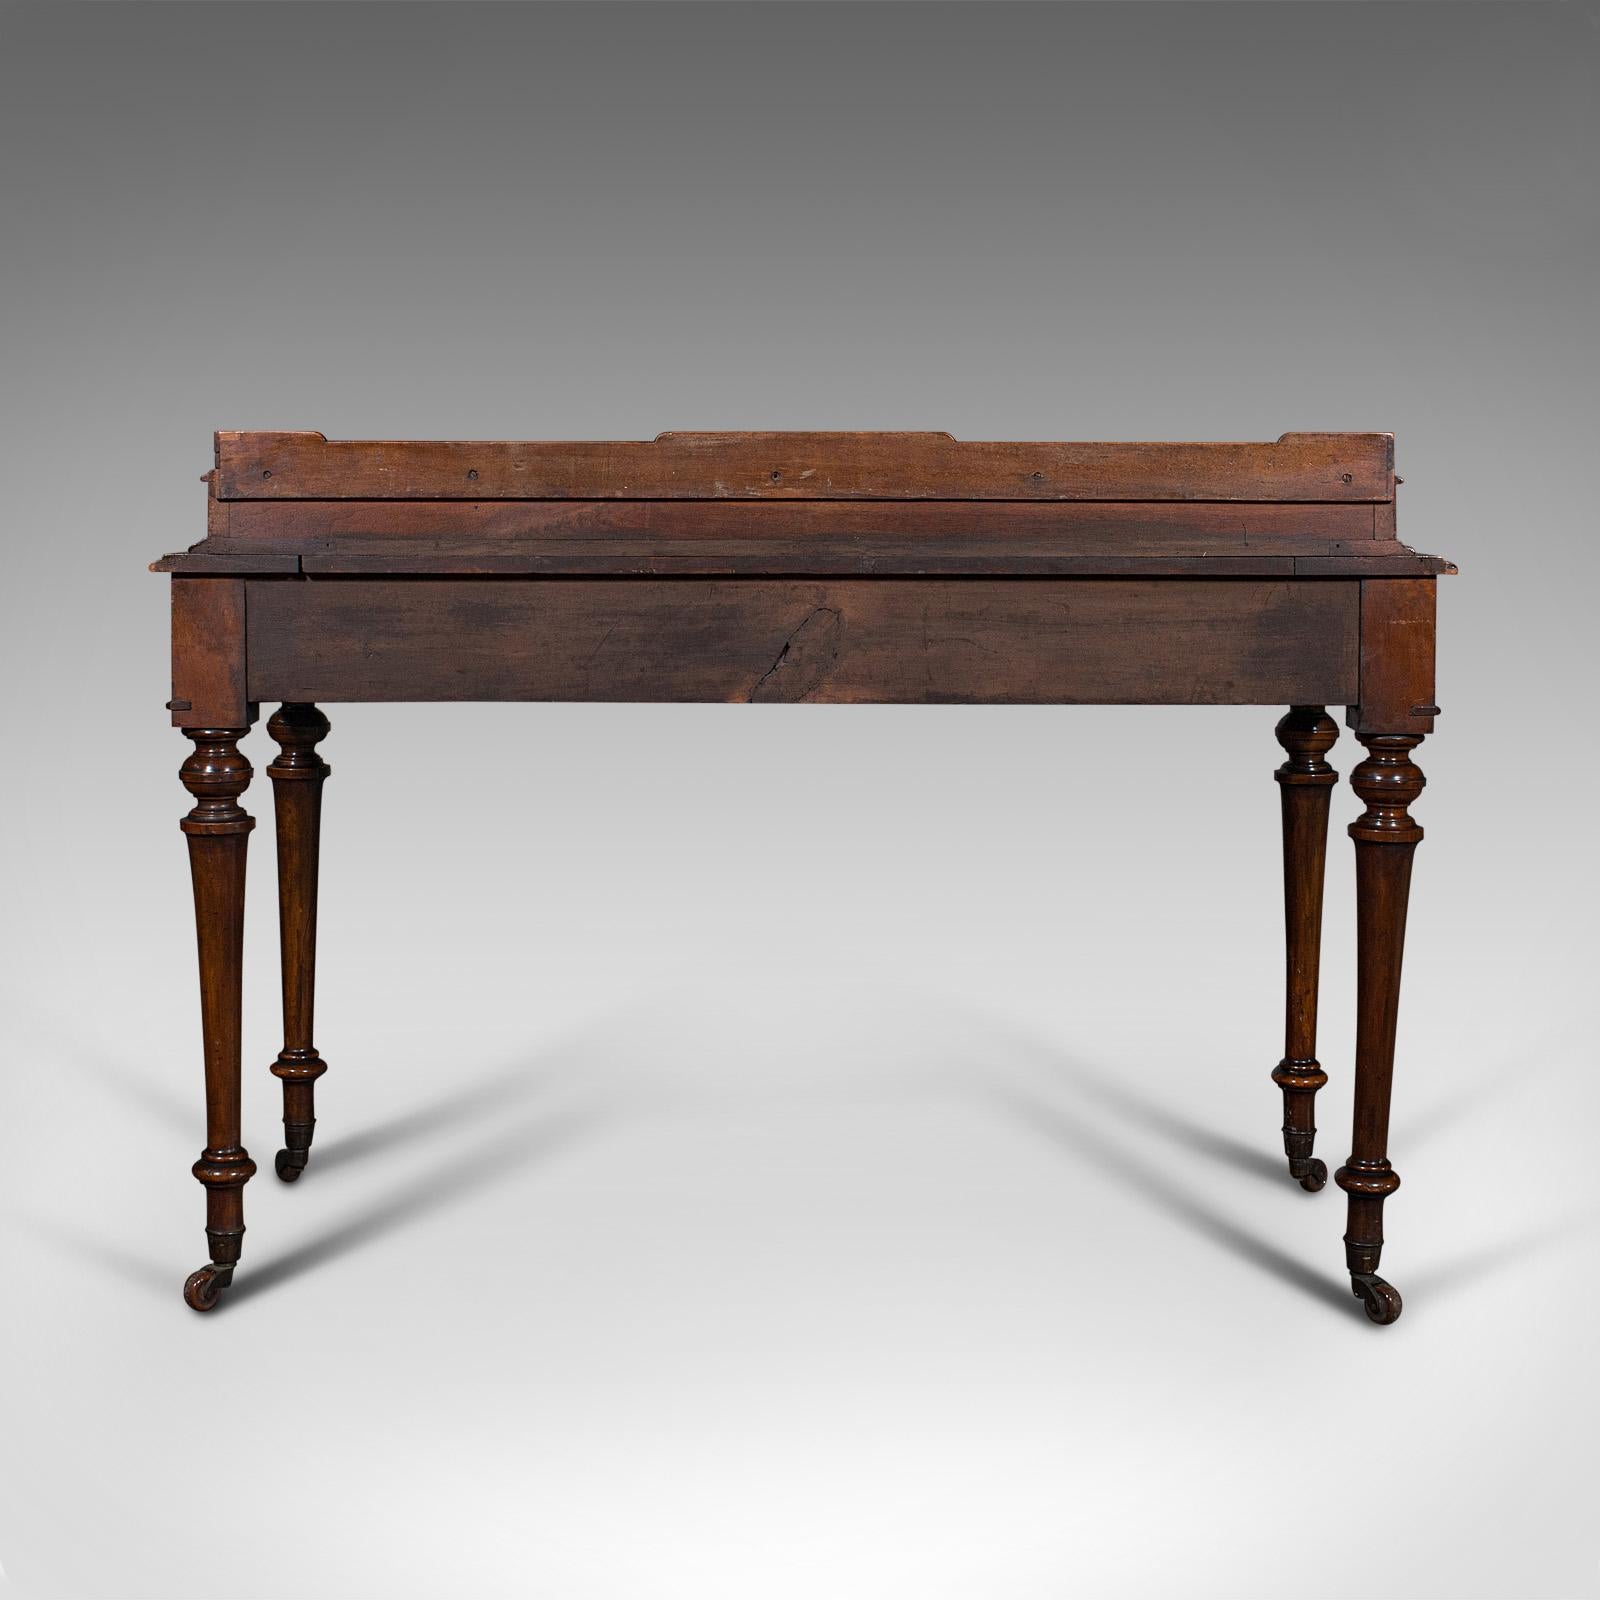 19th Century Antique Writing Desk, English, Burr Walnut, Correspondence Table, Victorian